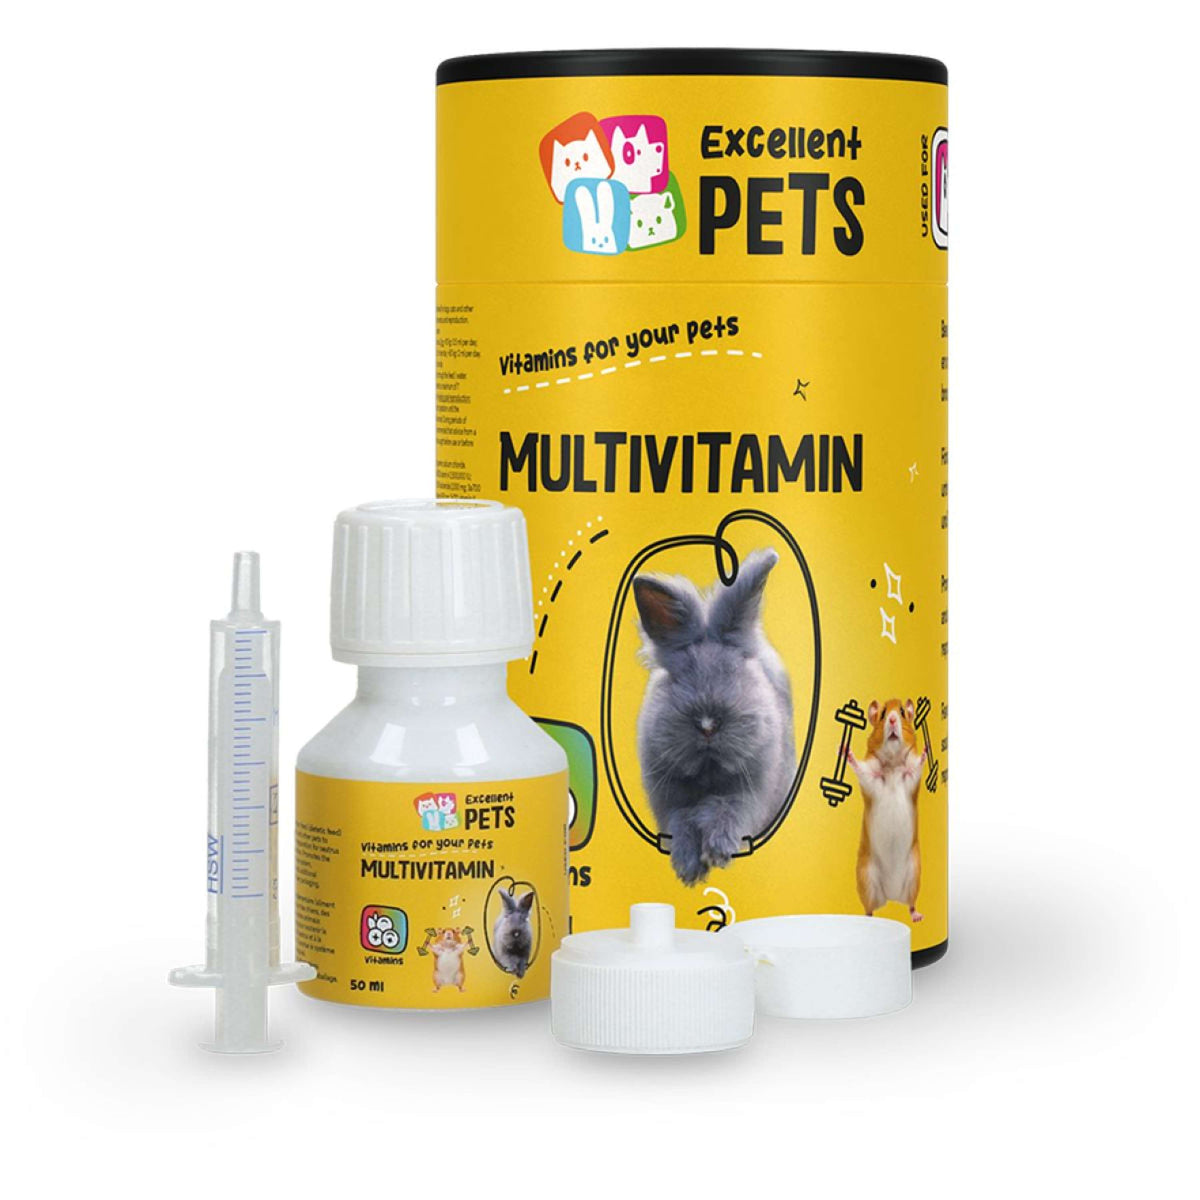 Excellent Multivitamine Pets